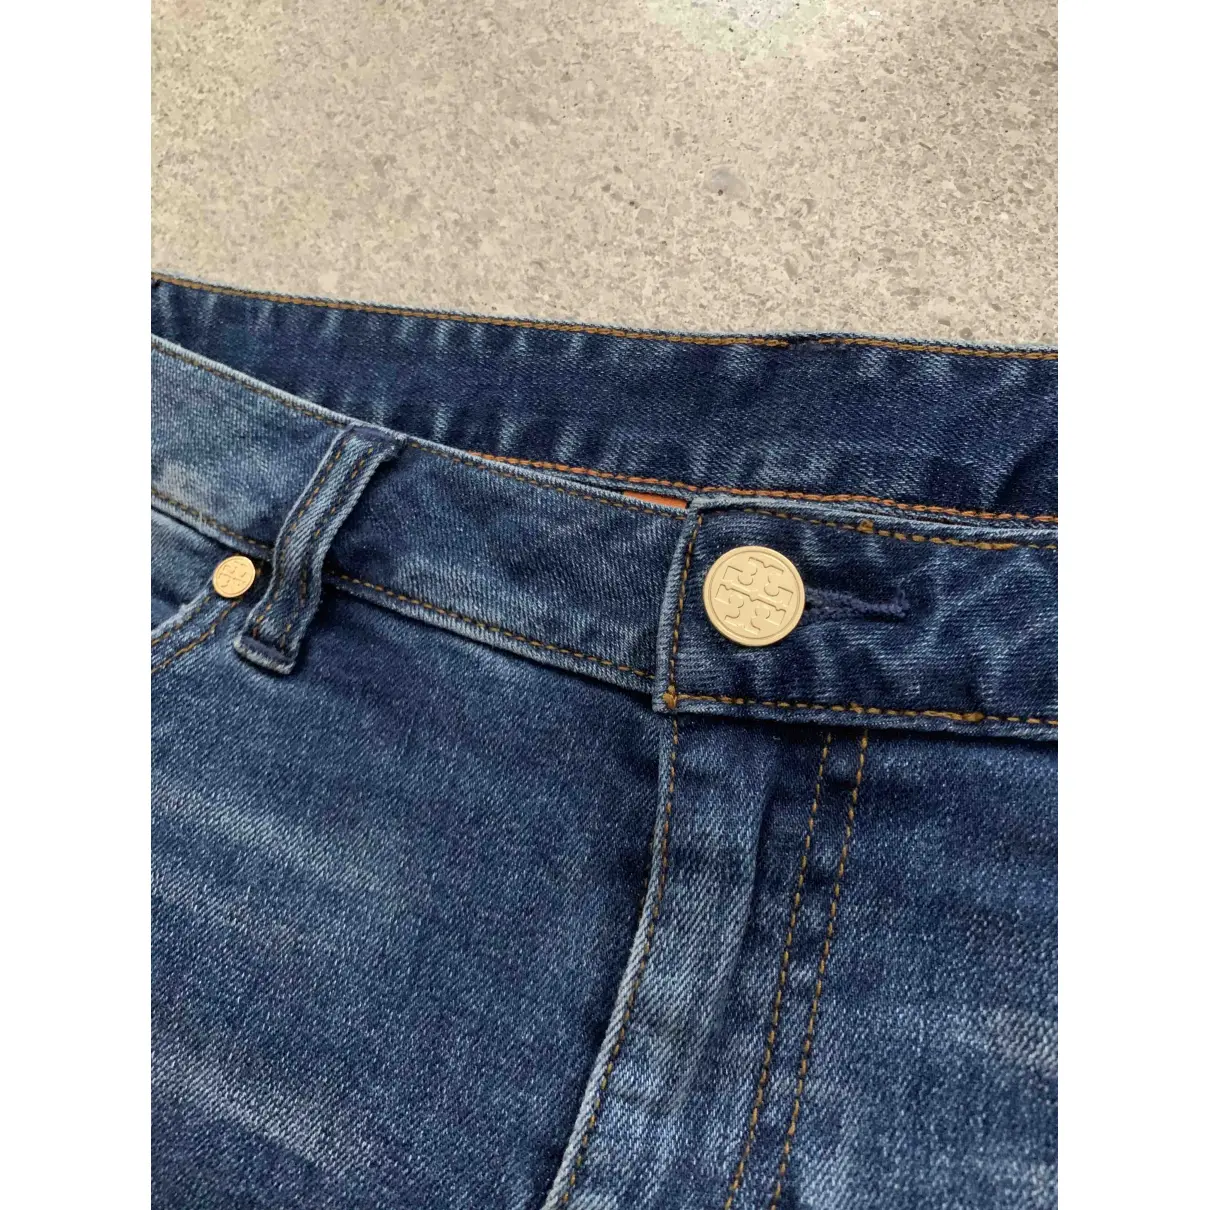 Buy Tory Burch Blue Denim - Jeans Shorts online